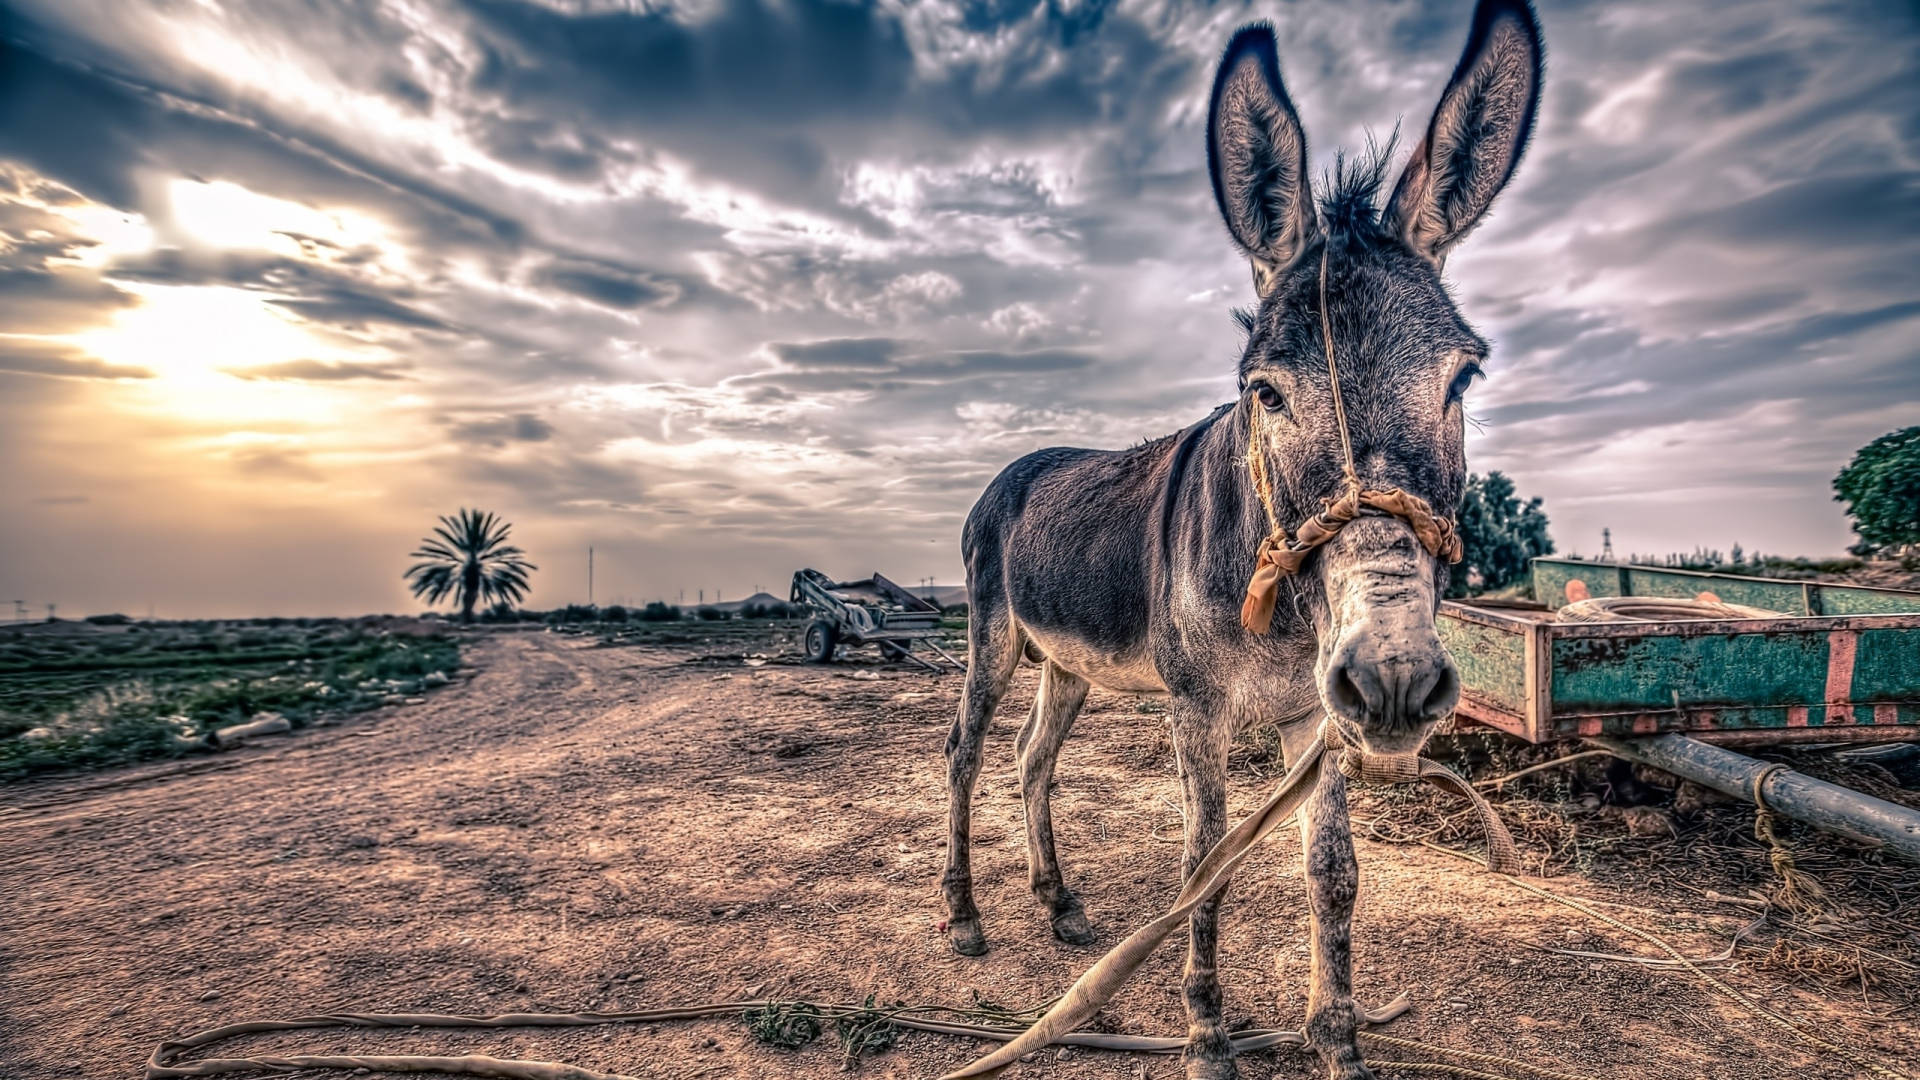 Aesthetic Donkey On Farm